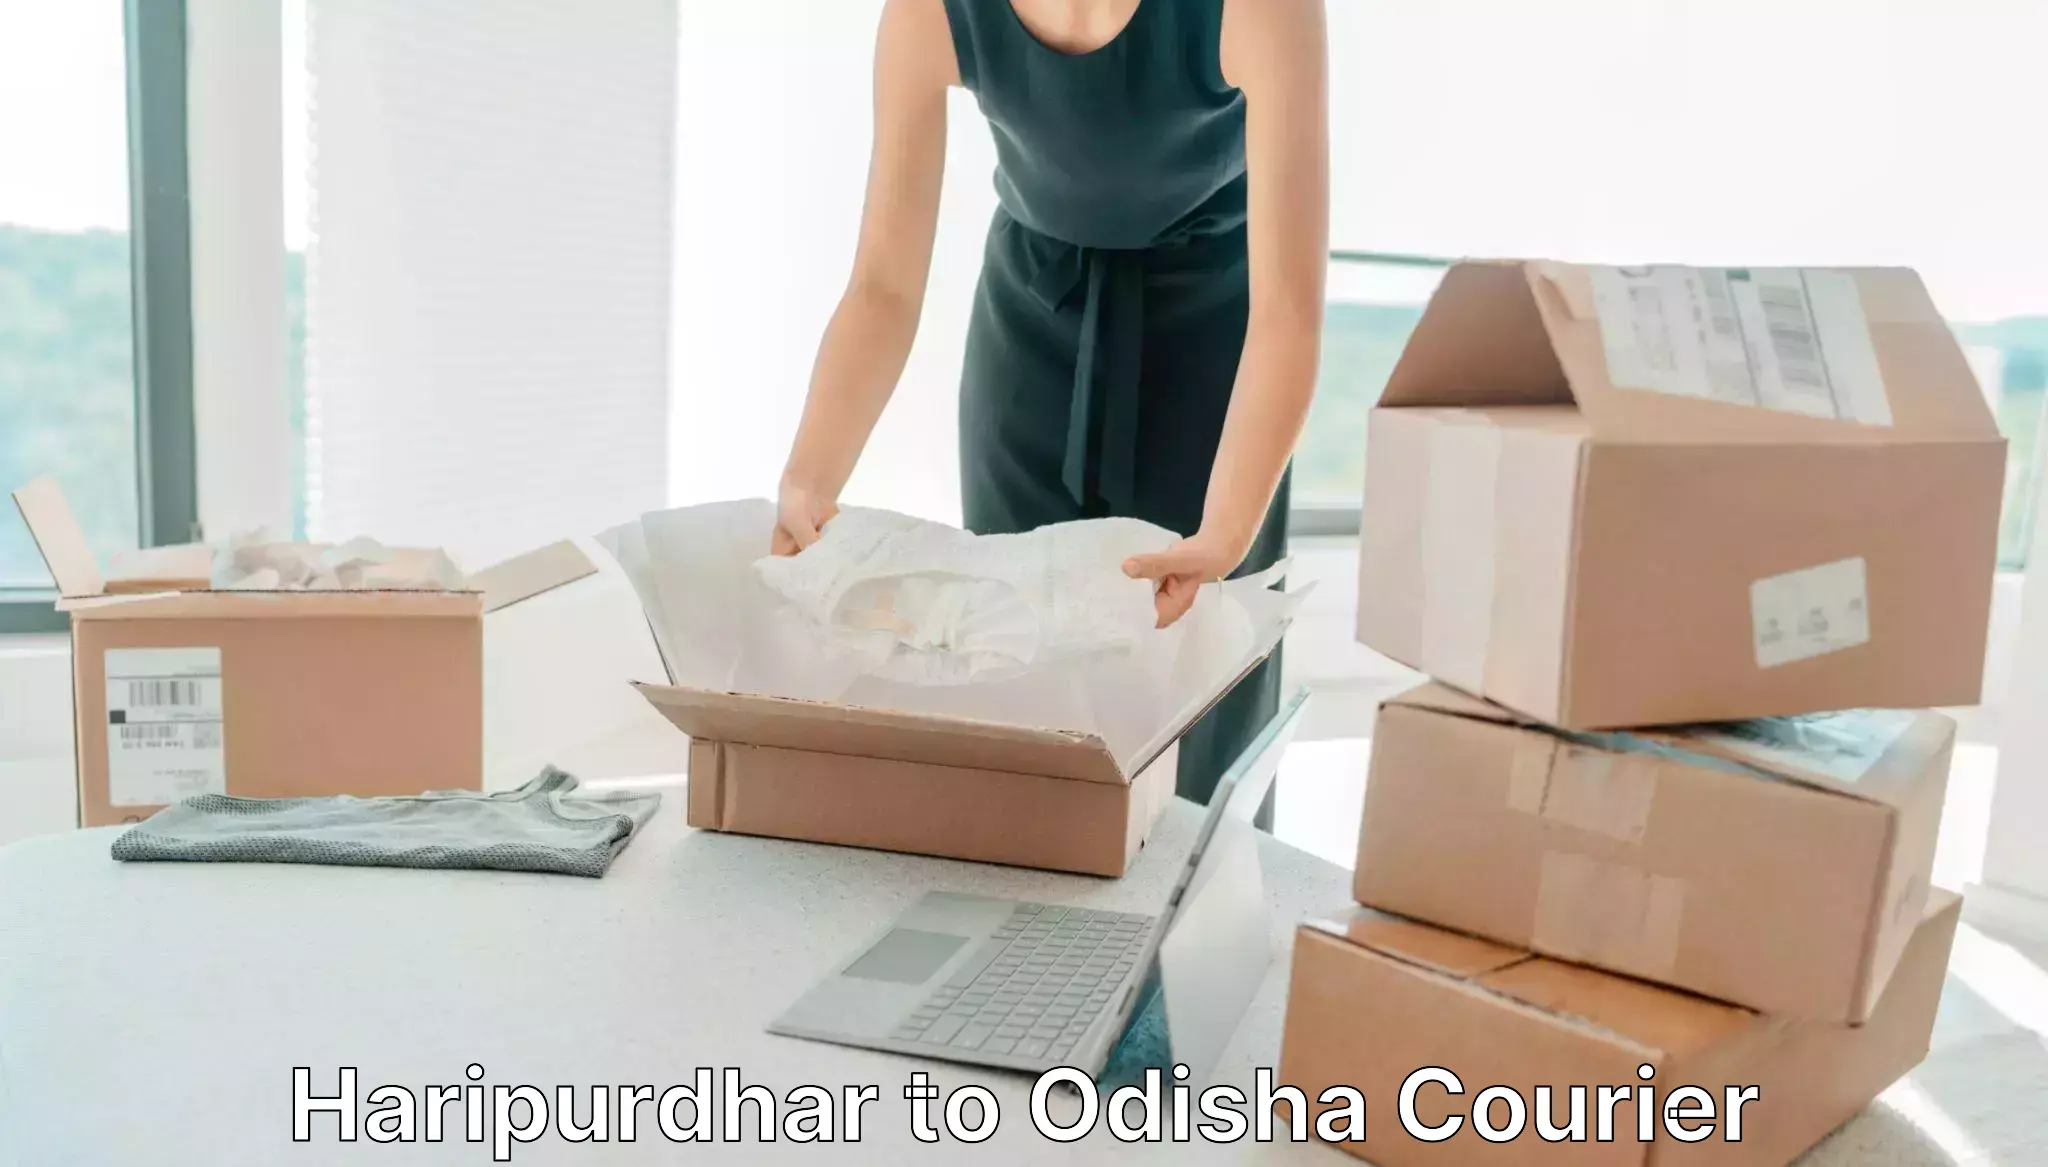 Professional courier handling Haripurdhar to Turanga